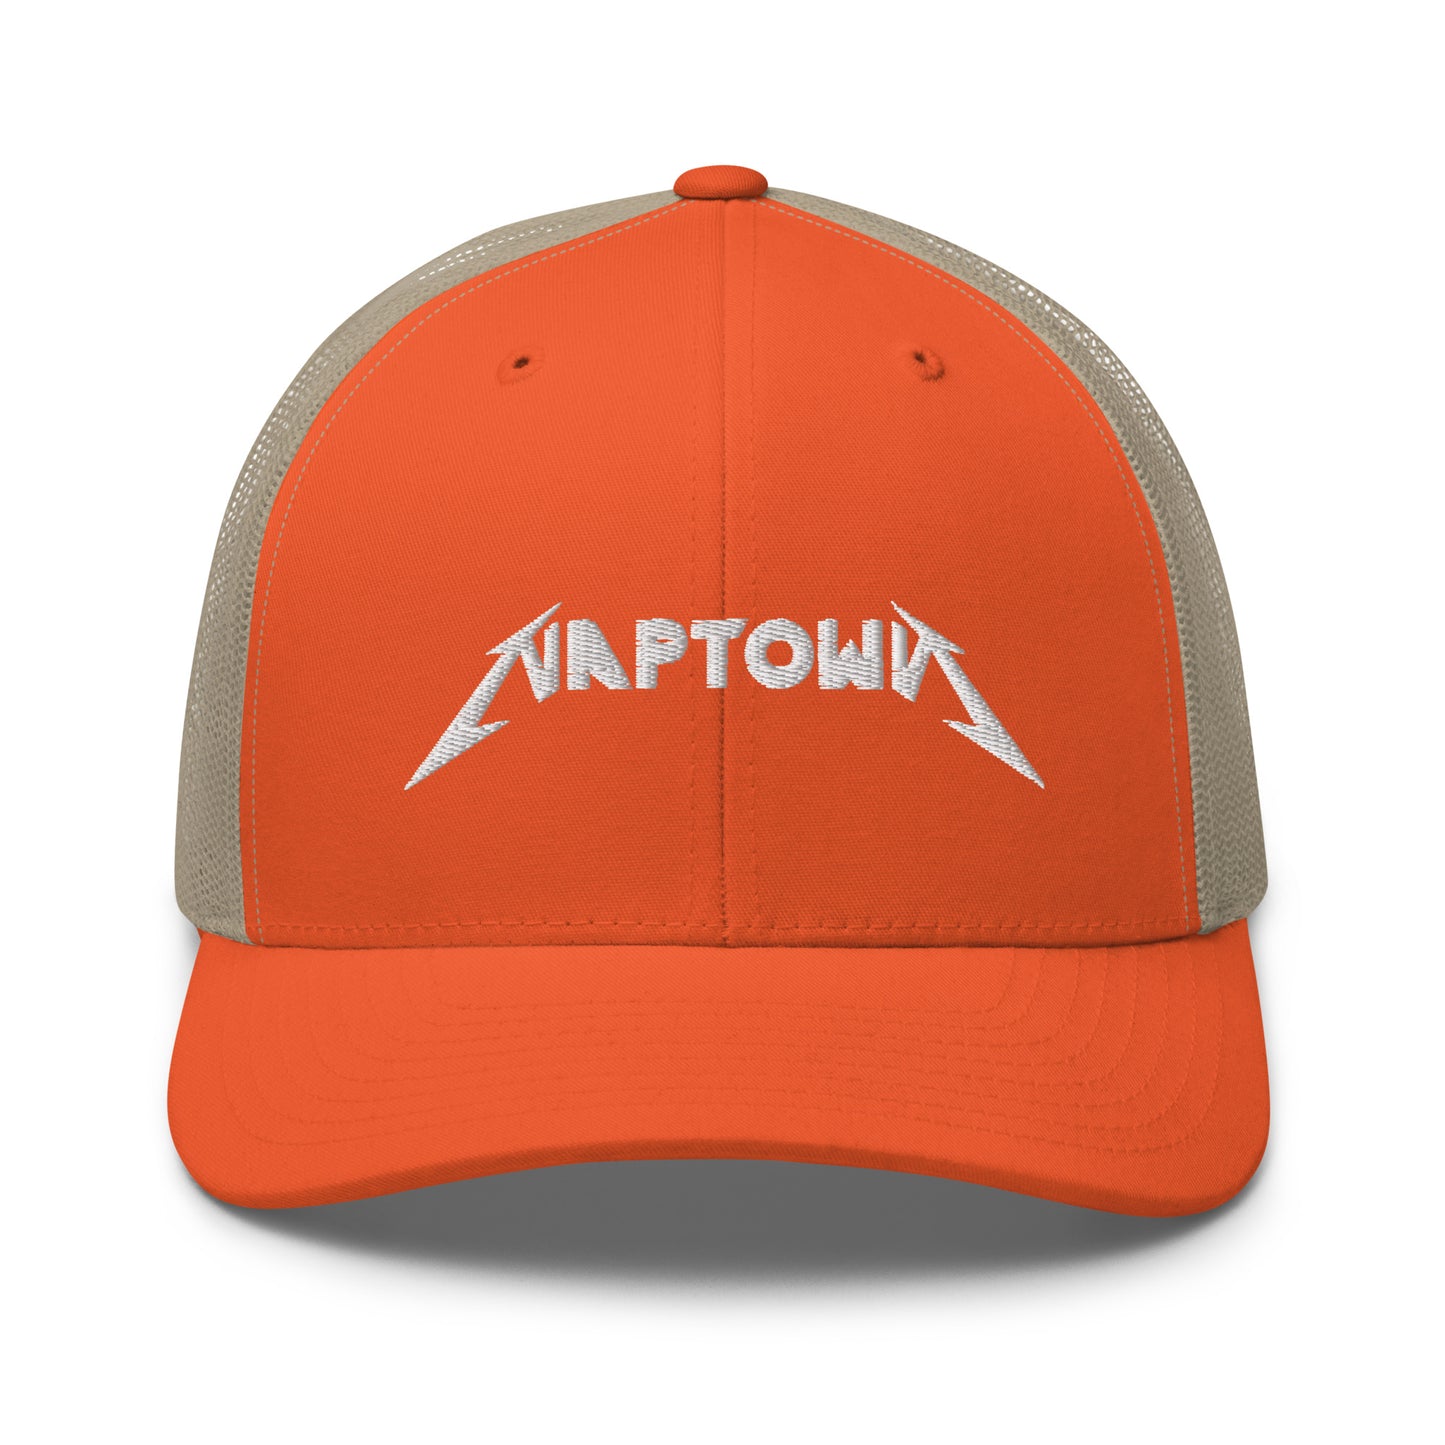 NAPTOWN - Retro Trucker Cap